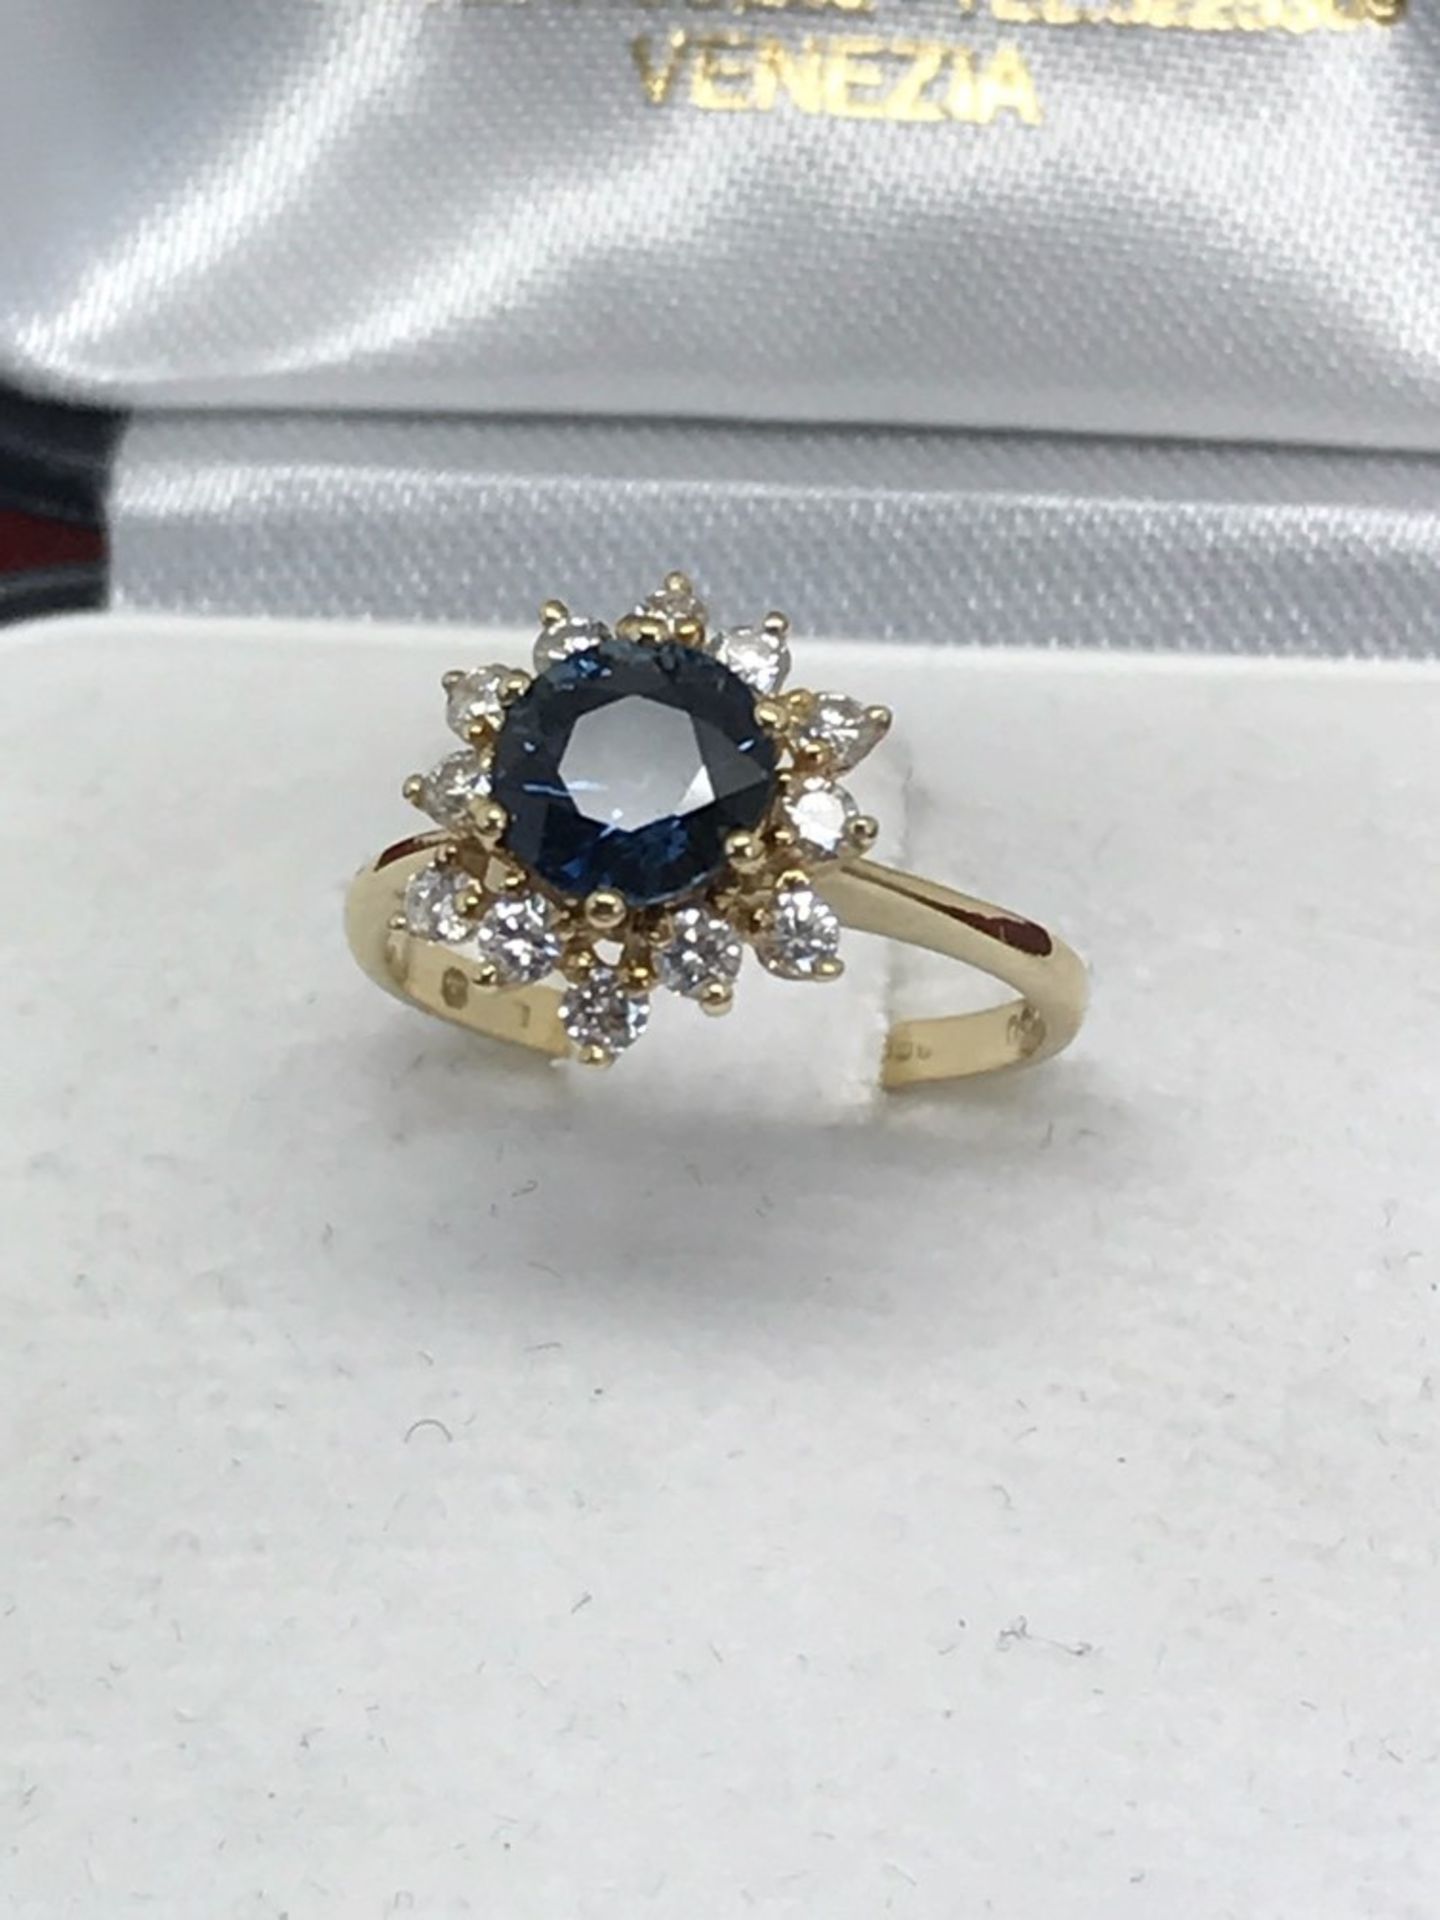 FINE 18ct GOLD BLUE SAPPHIRE & DIAMOND RING - Image 2 of 3